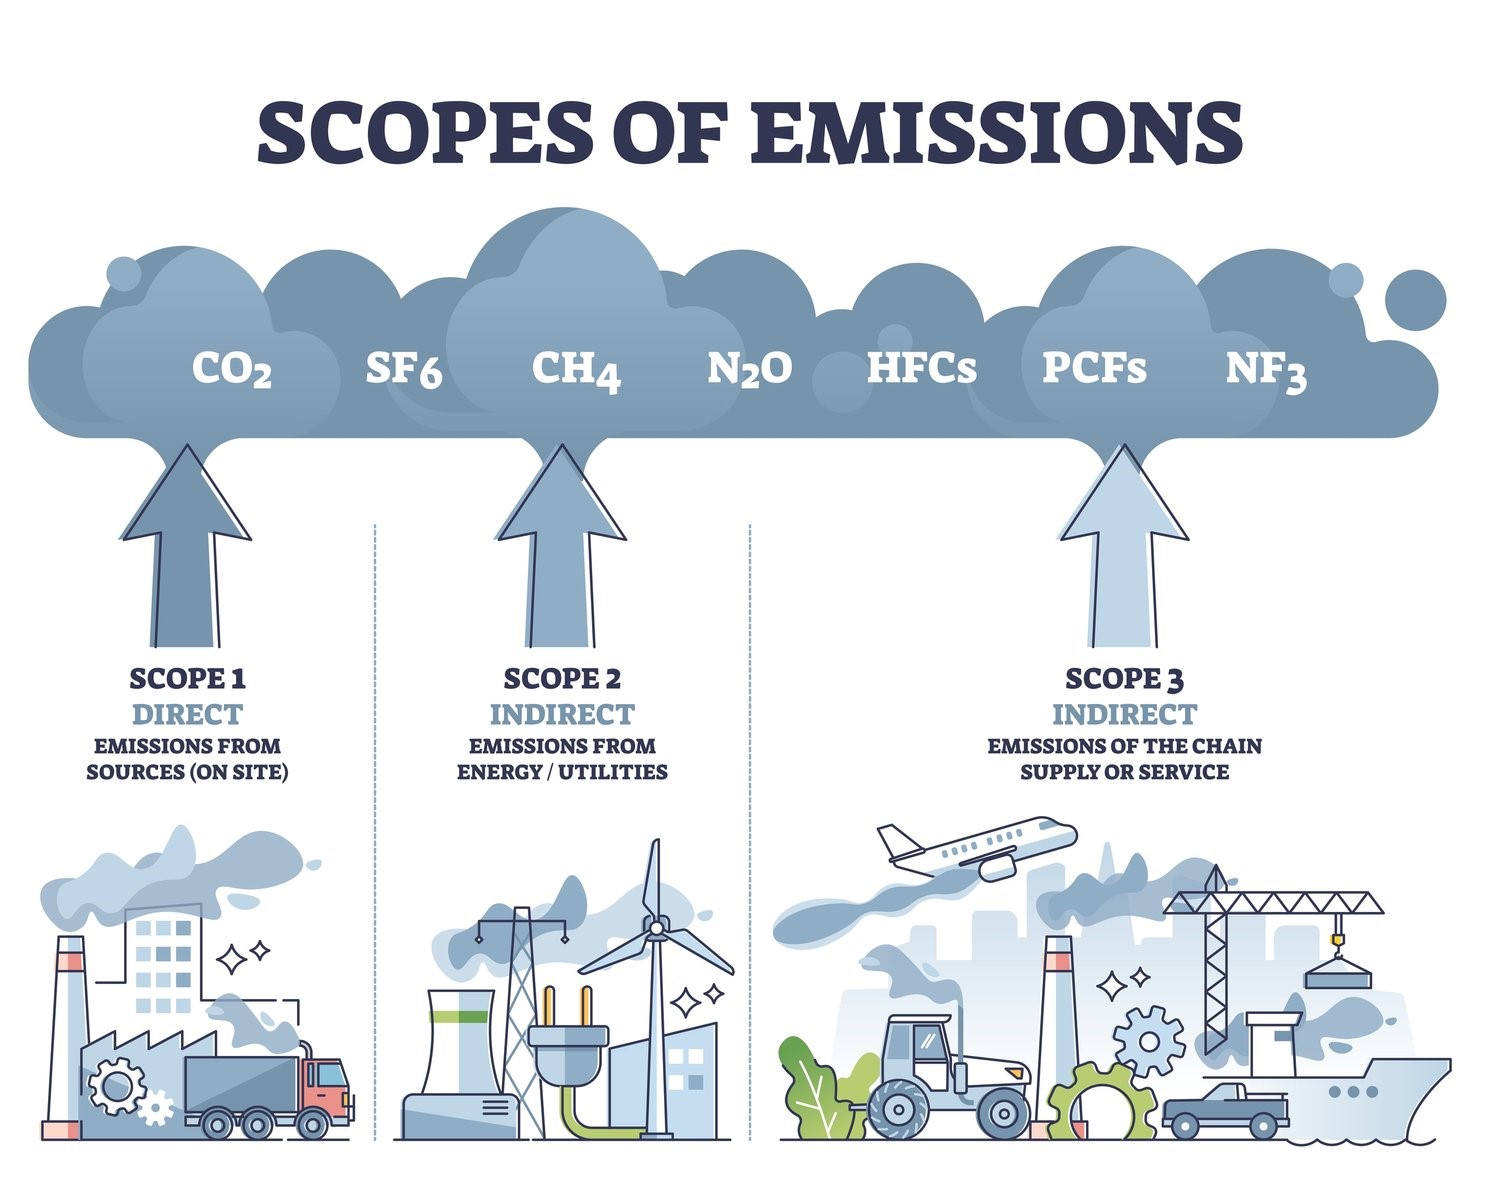 Scopes of emissions